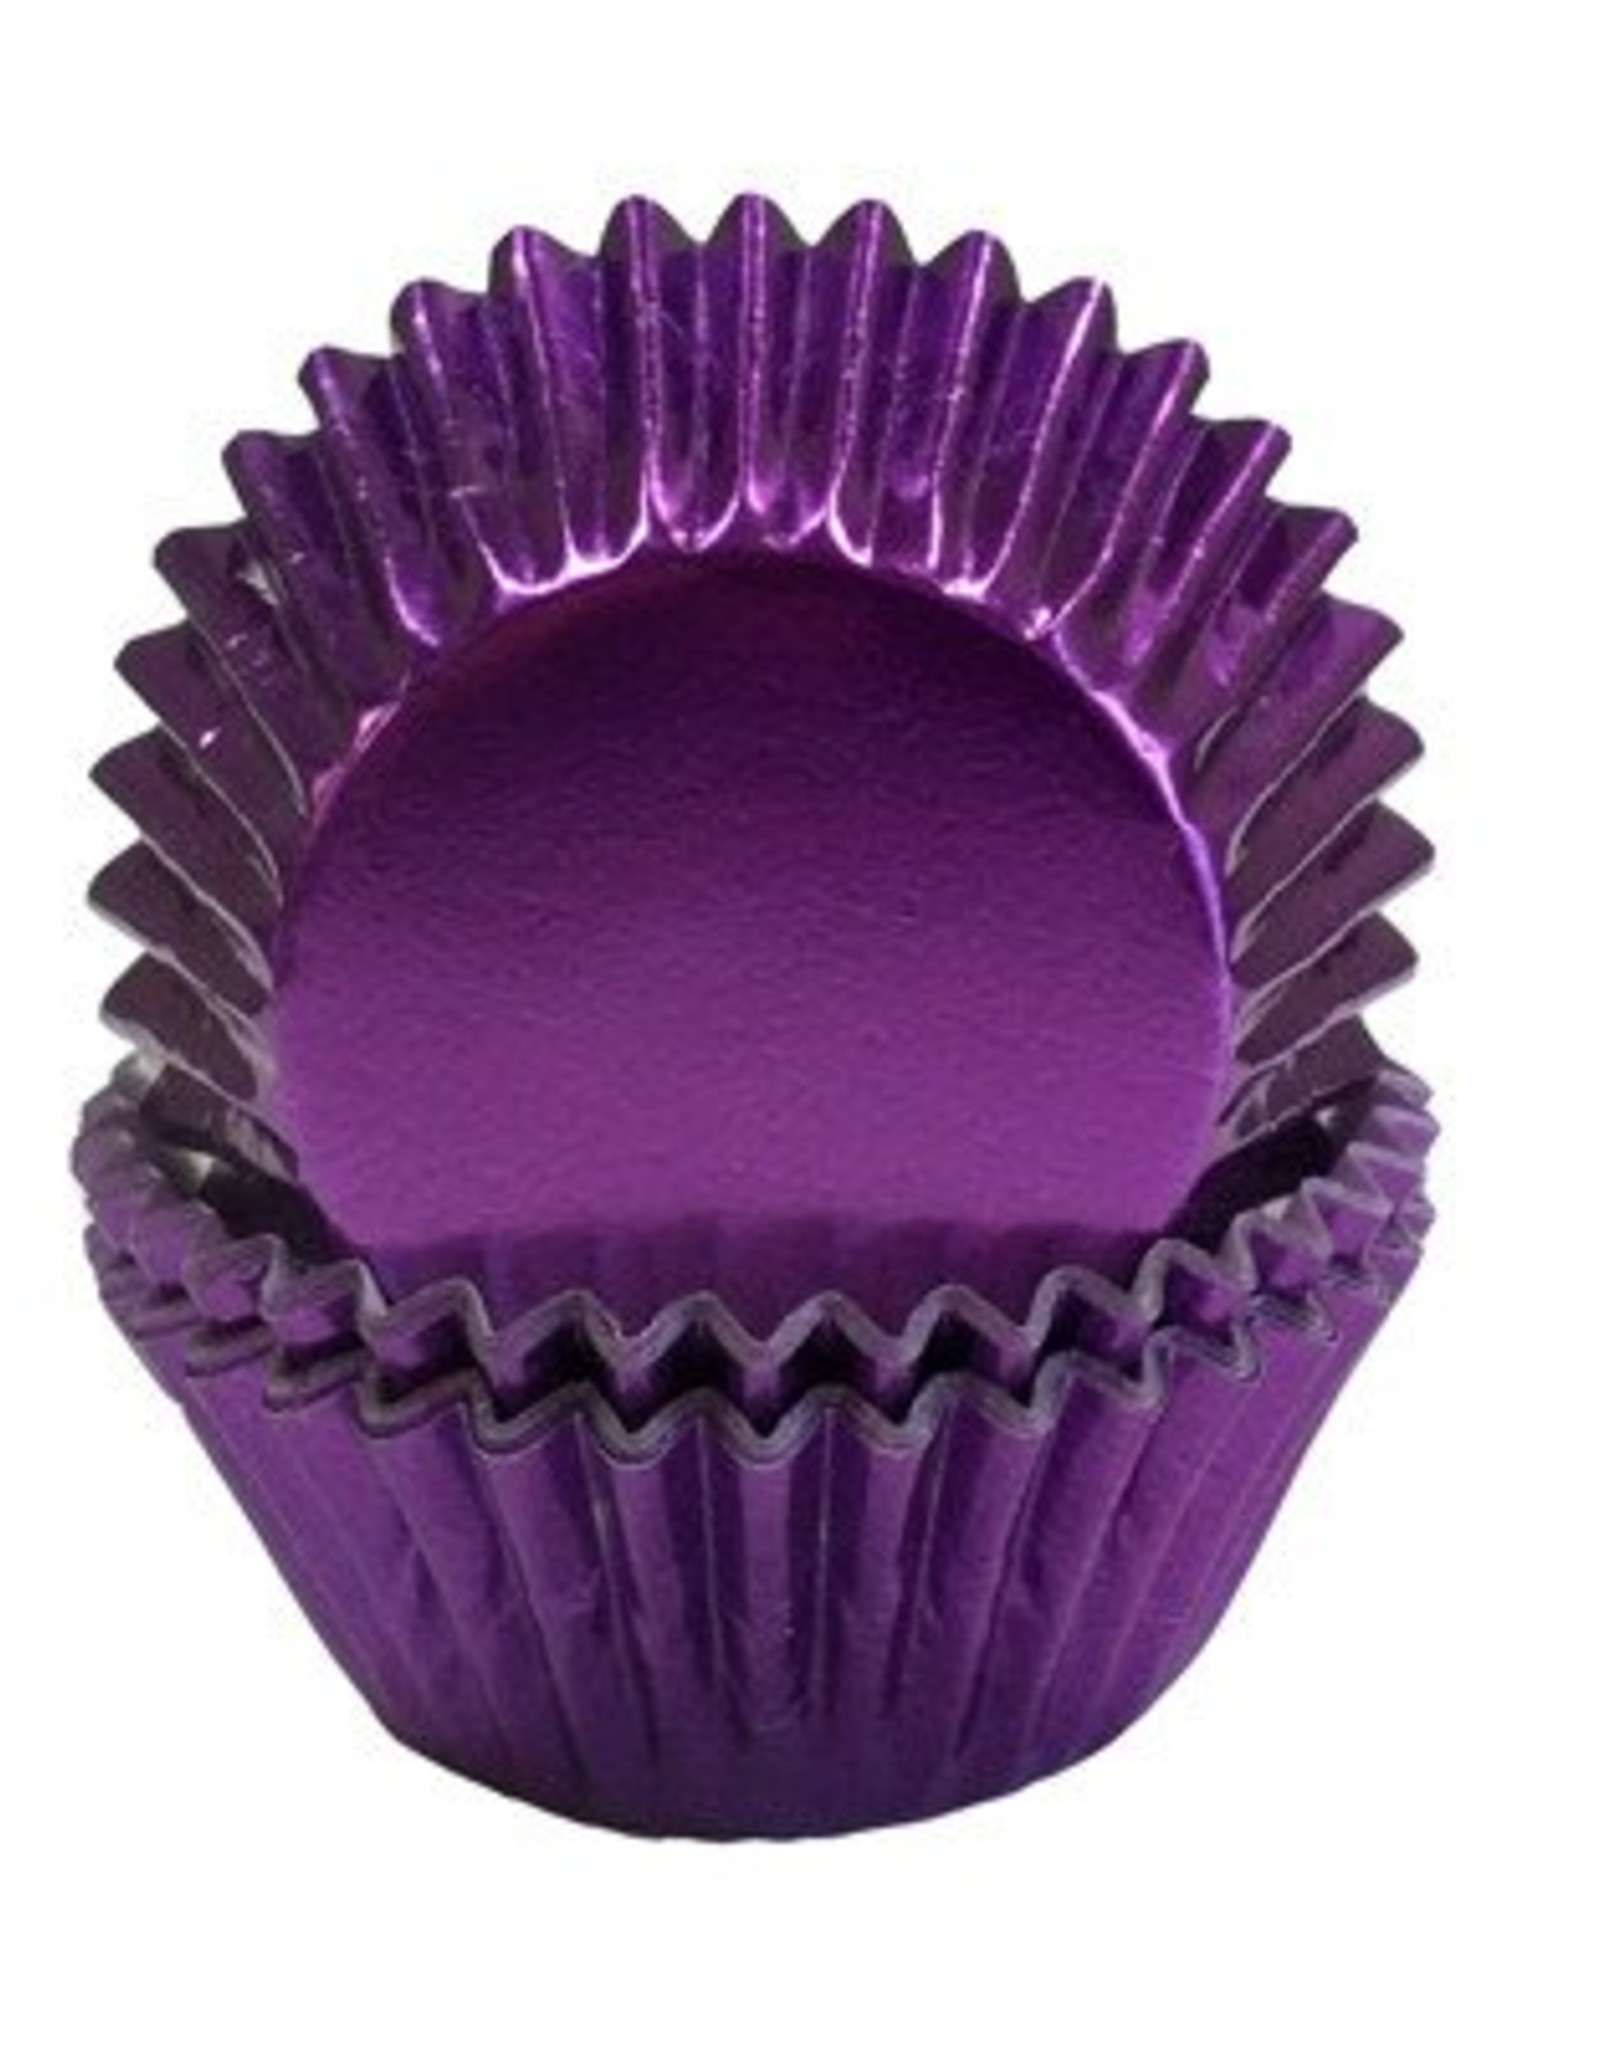 Purple Foil Mini Baking Cups (40-50ct)